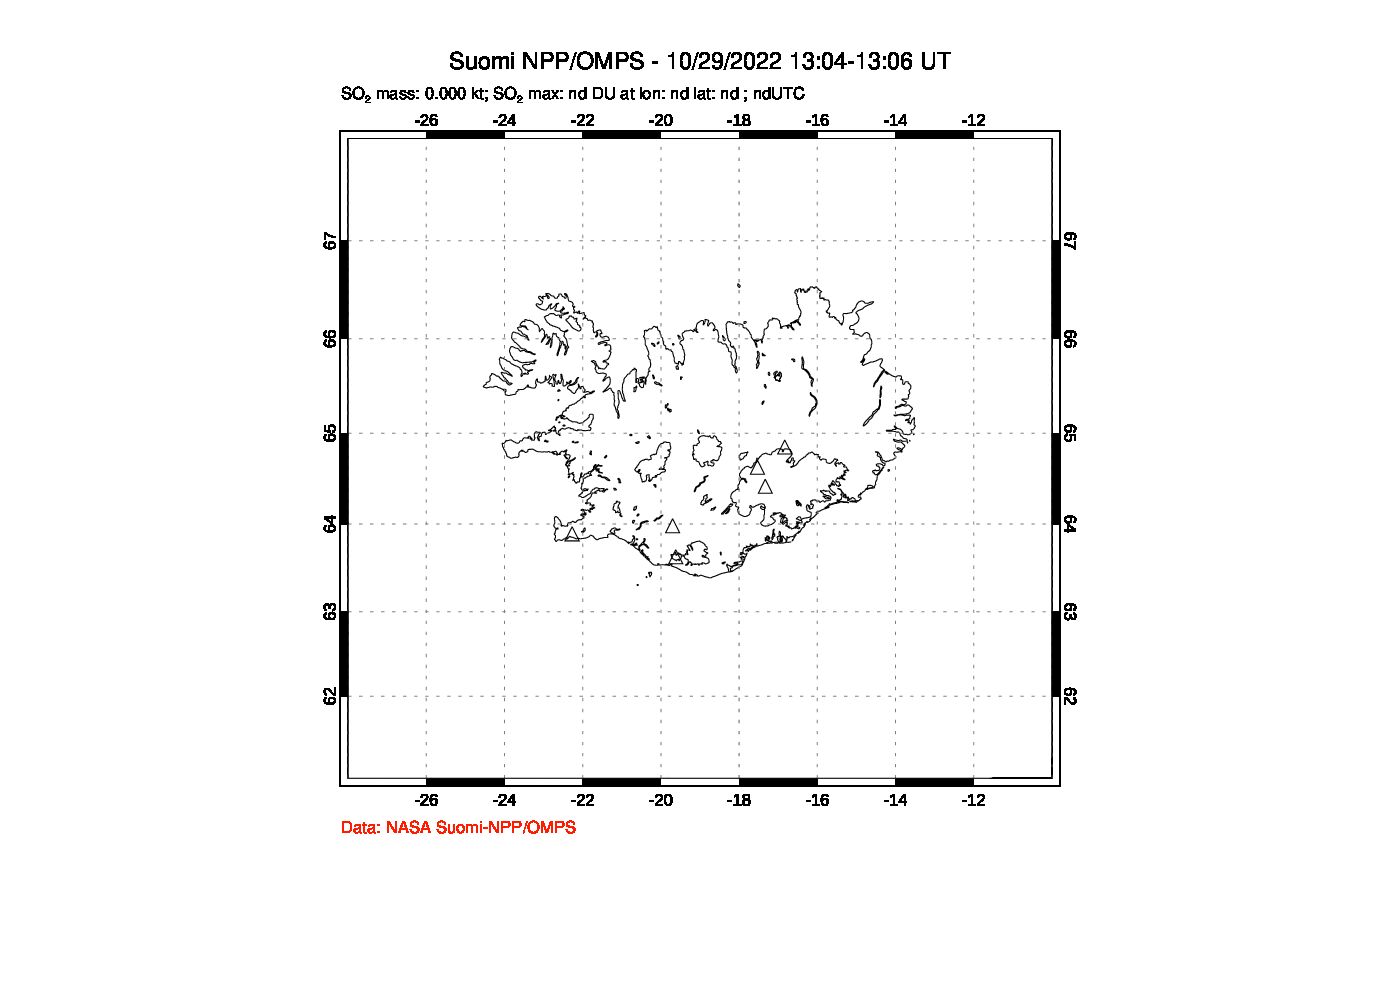 A sulfur dioxide image over Iceland on Oct 29, 2022.